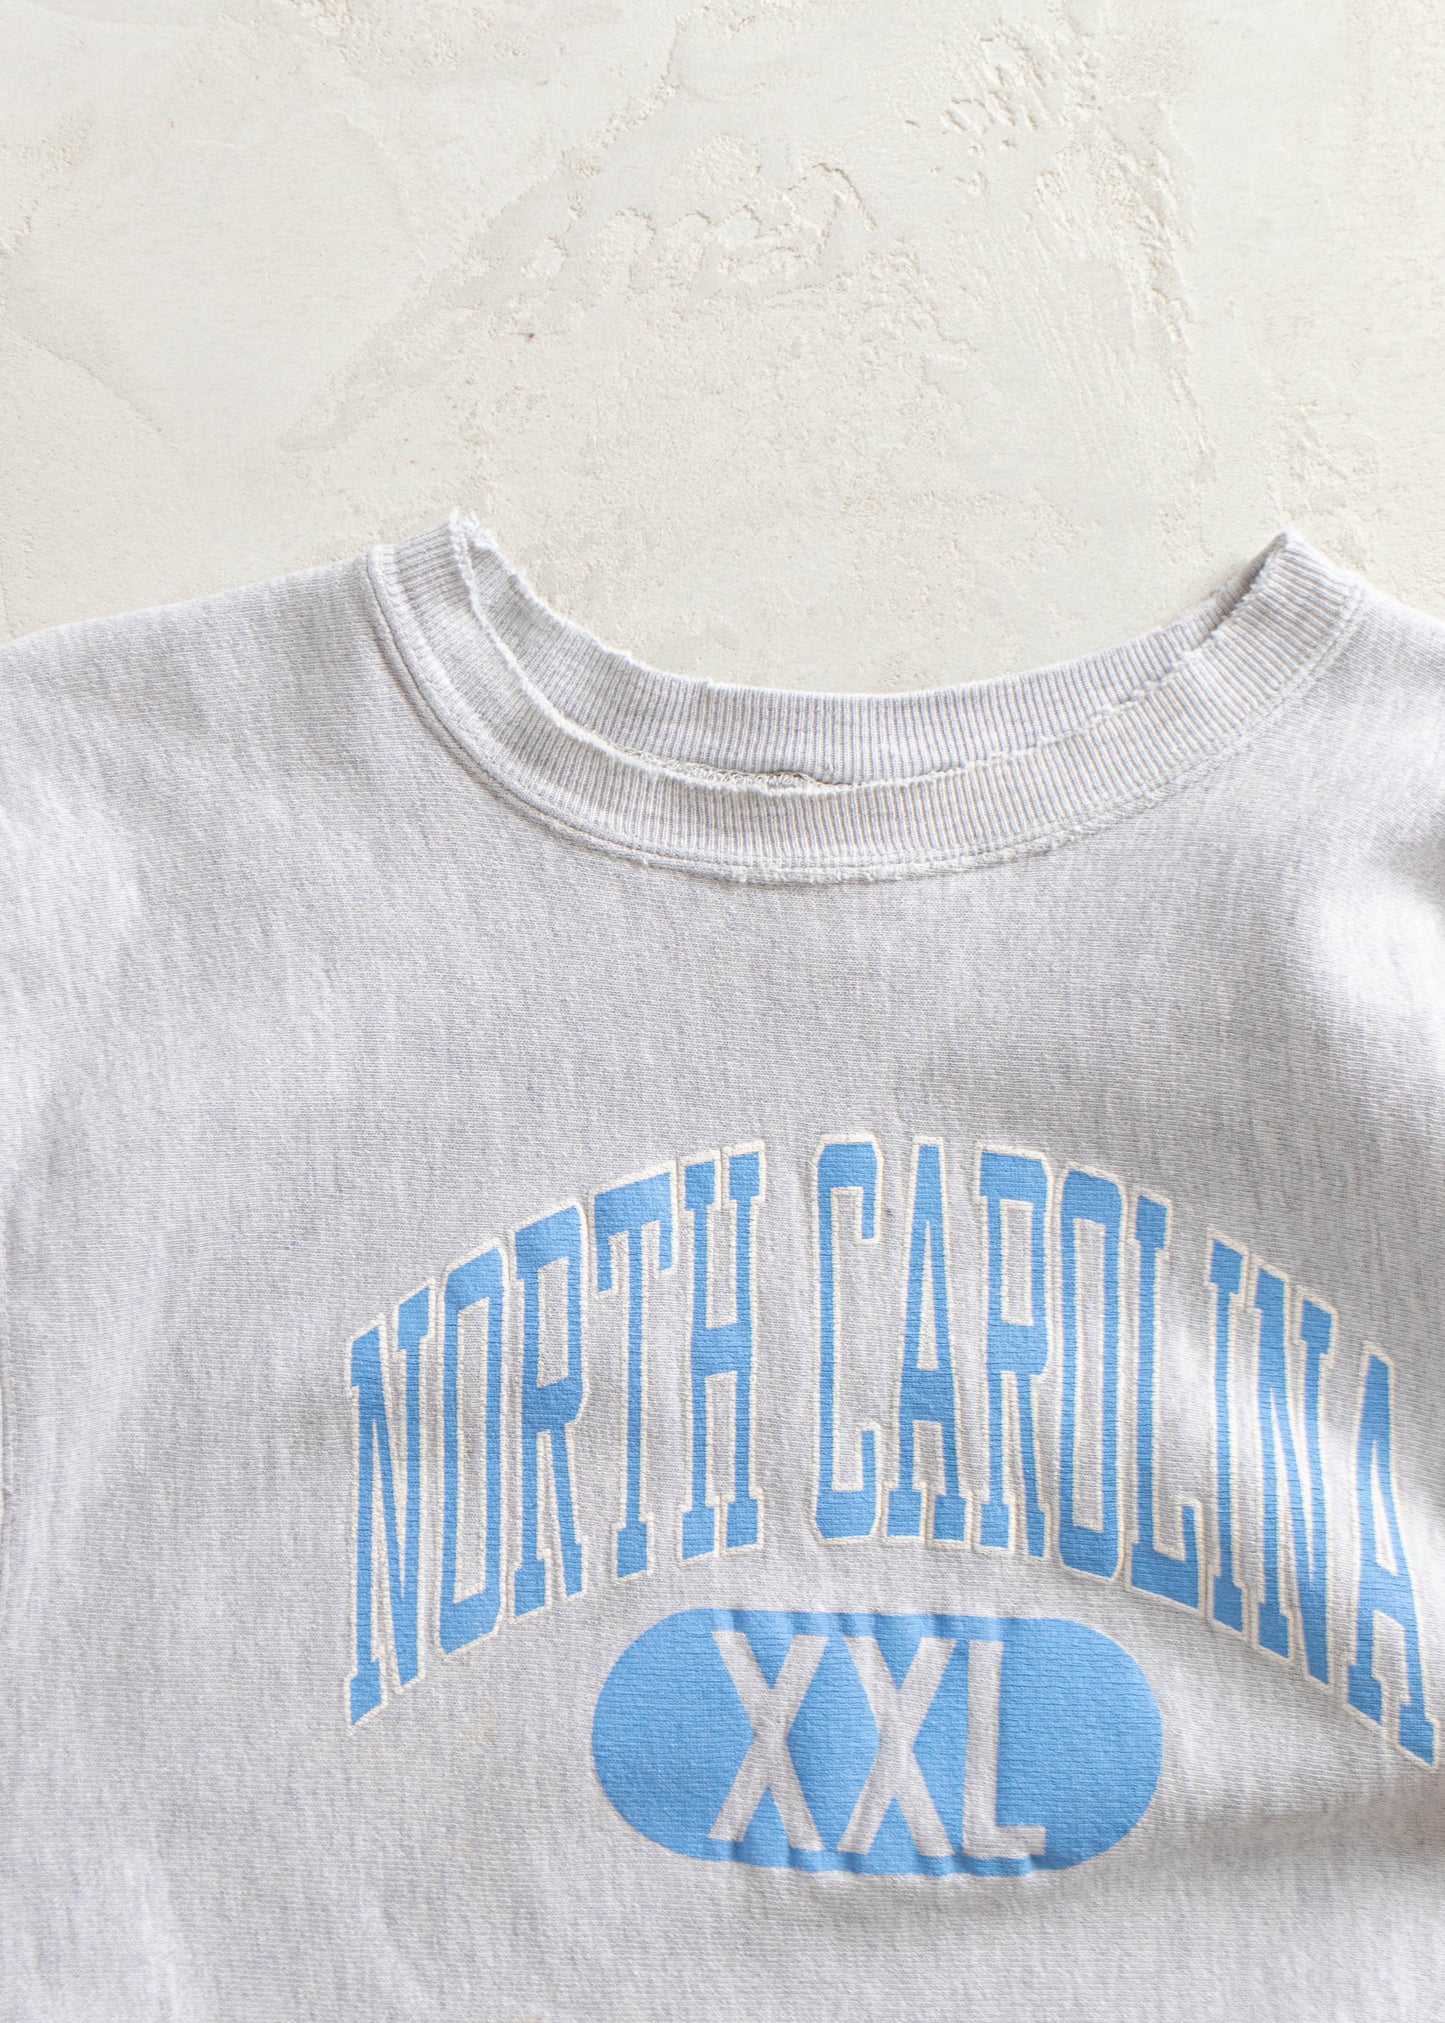 Vintage 1990s Champion Reverse Weave North Carolina Sweatshirt Size S/M